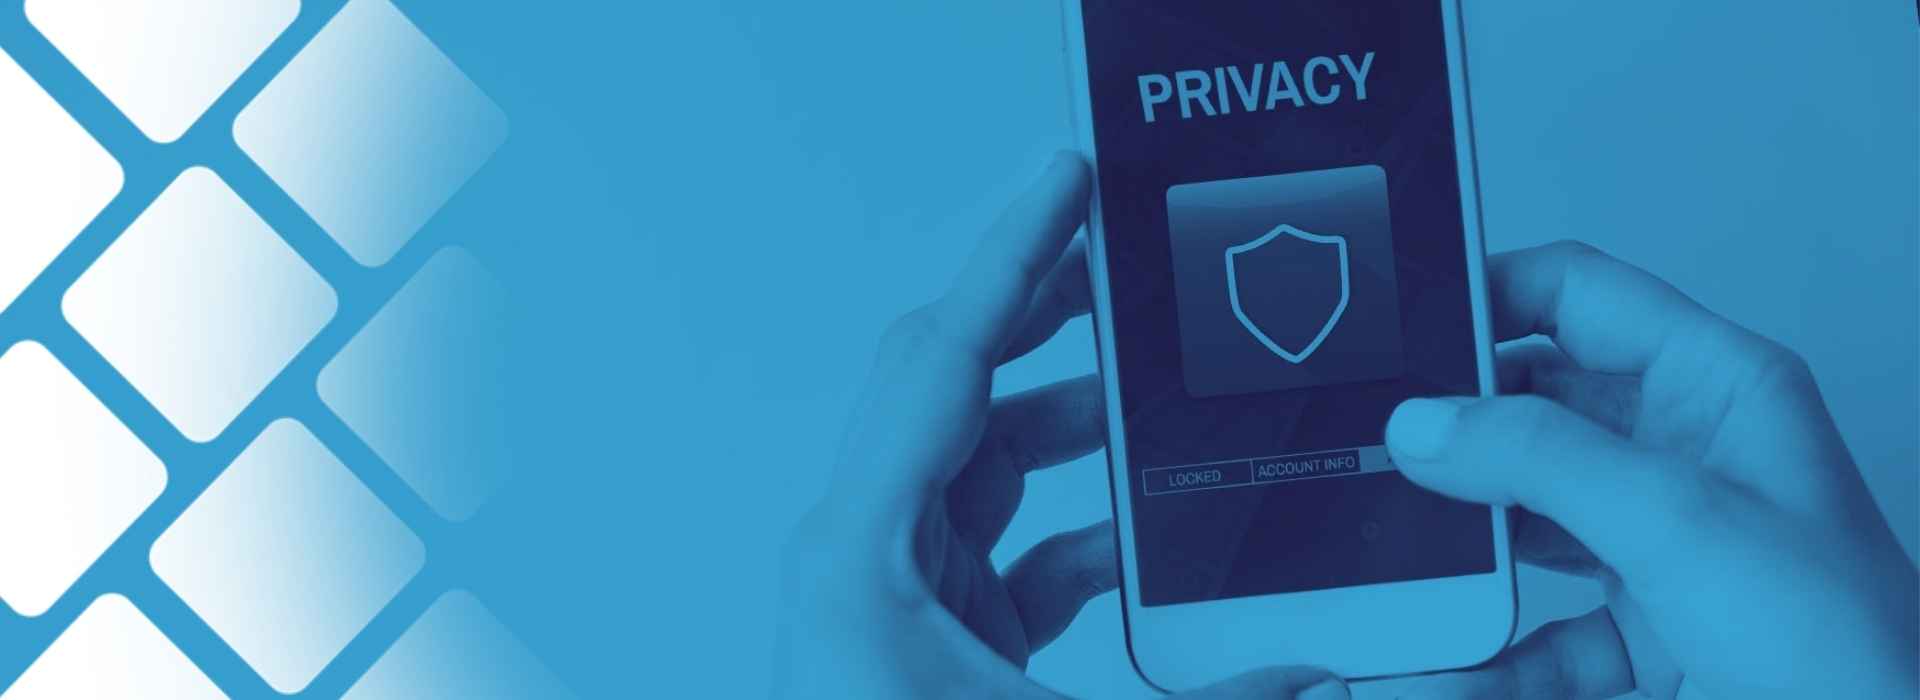 Privacy Shield auf Handy Display 